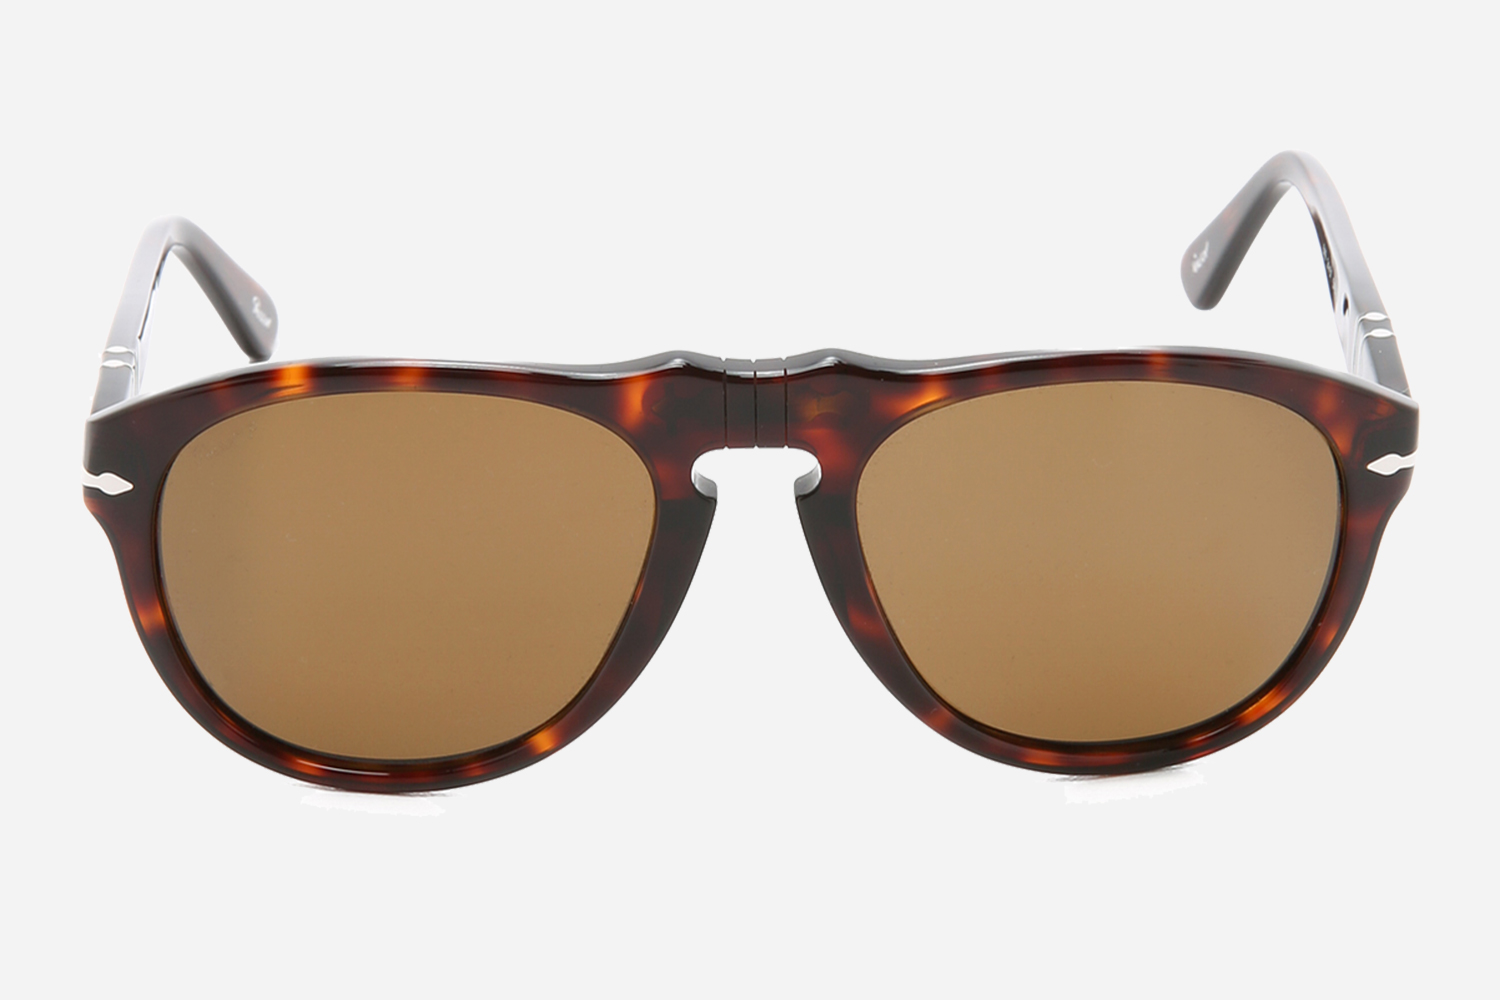 Get a Discount on Persol Classic Tortoiseshell Sunglasses